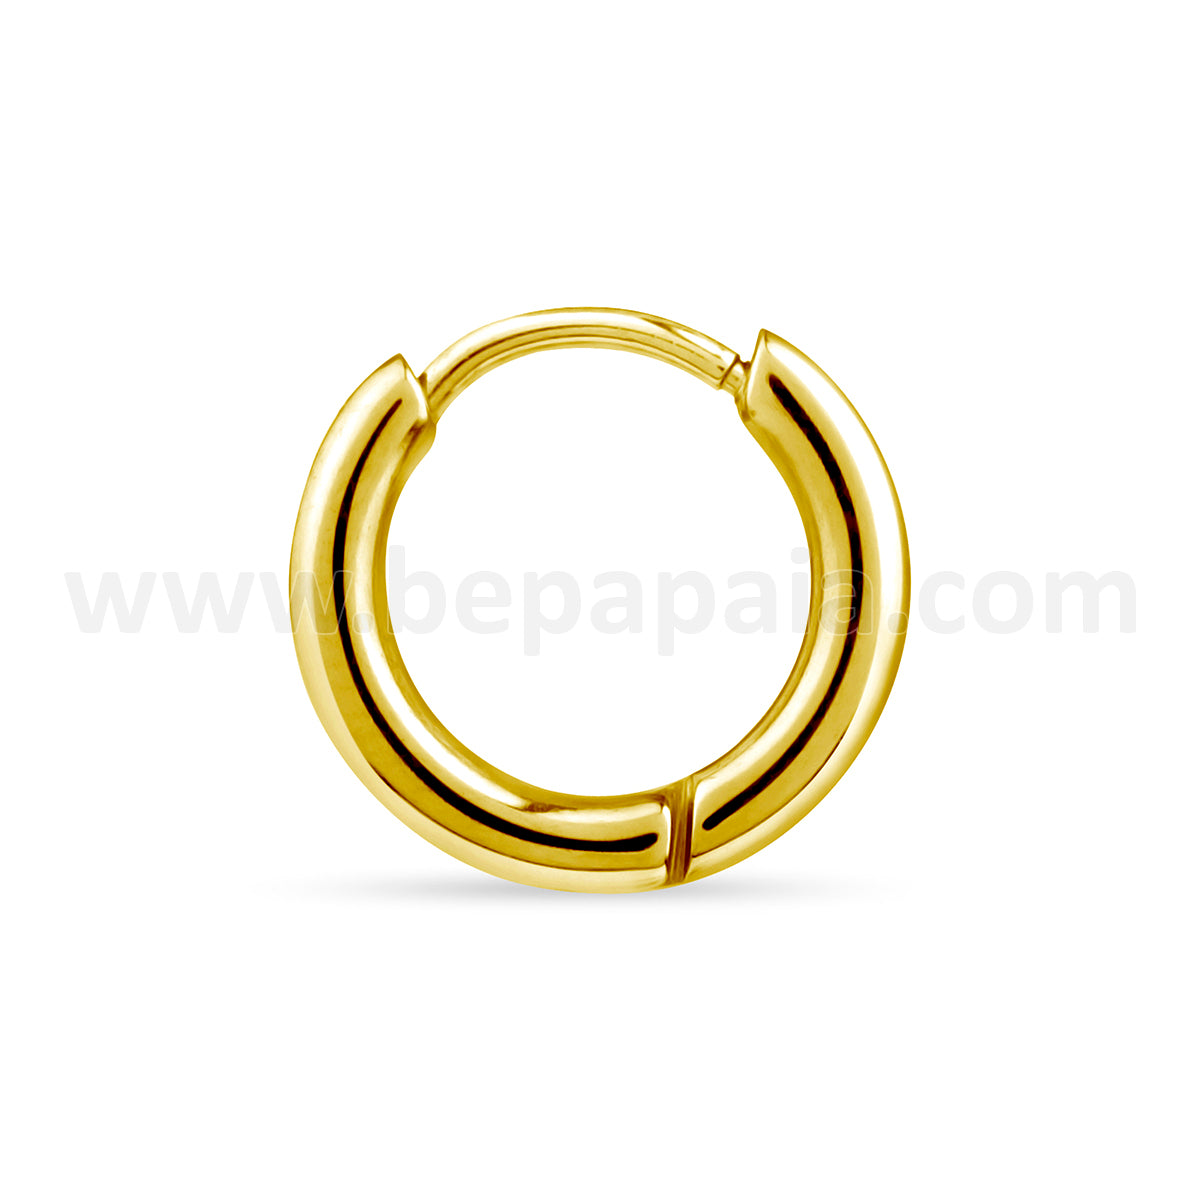 2mm golden steel hoop earring (small sizes: 8-12mm)